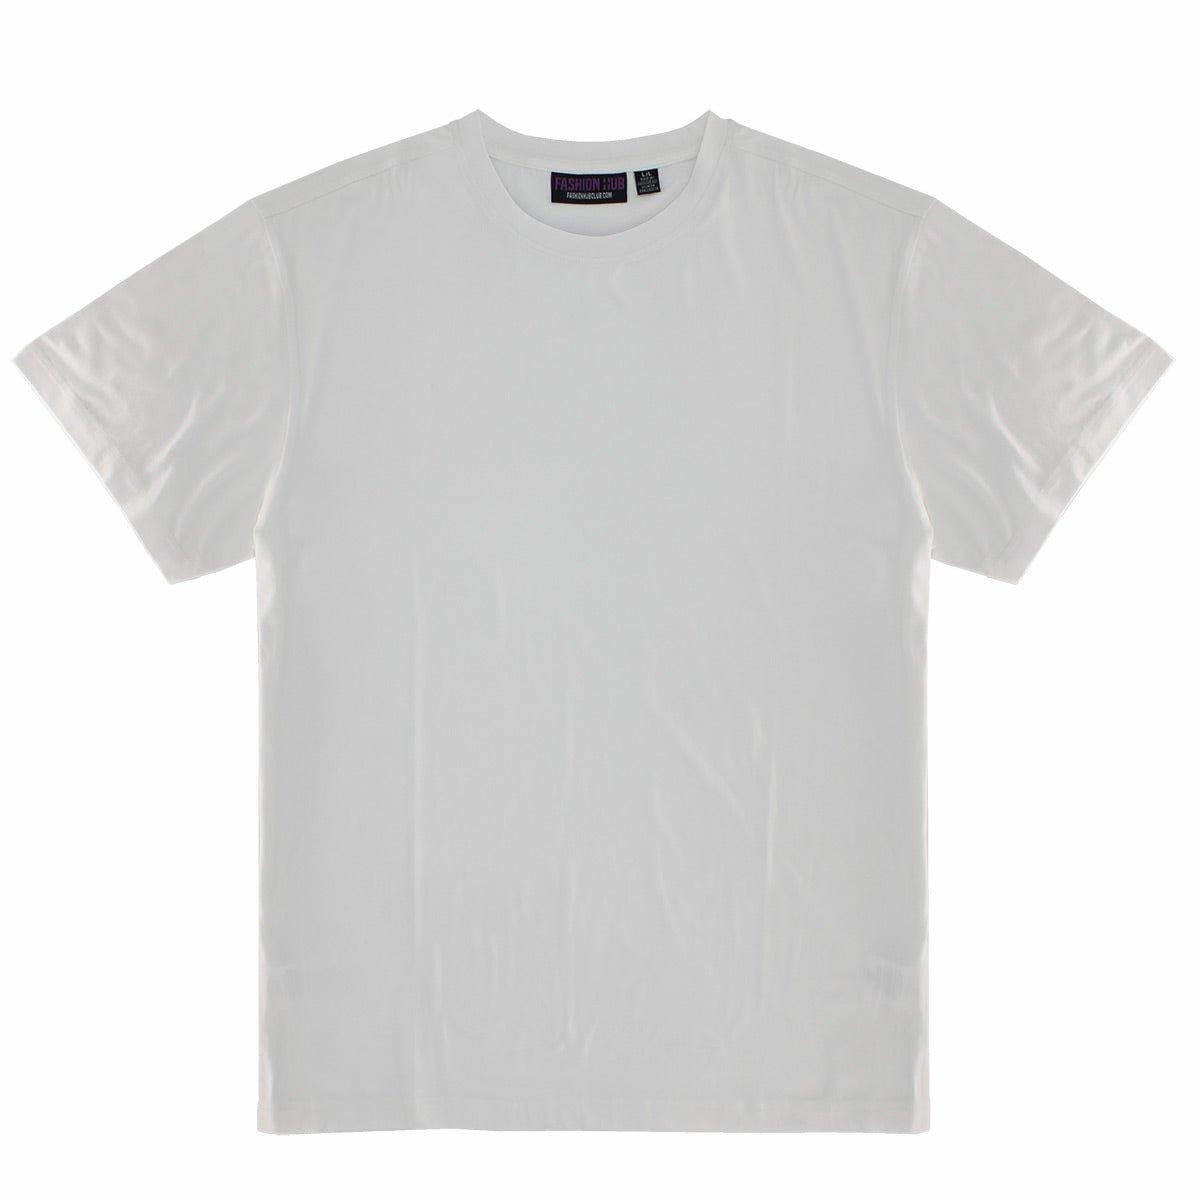 White Better Basics Ultra-Soft Crewneck Short Sleeve T-Shirt by Fashion Hub - Fashion Hub Club